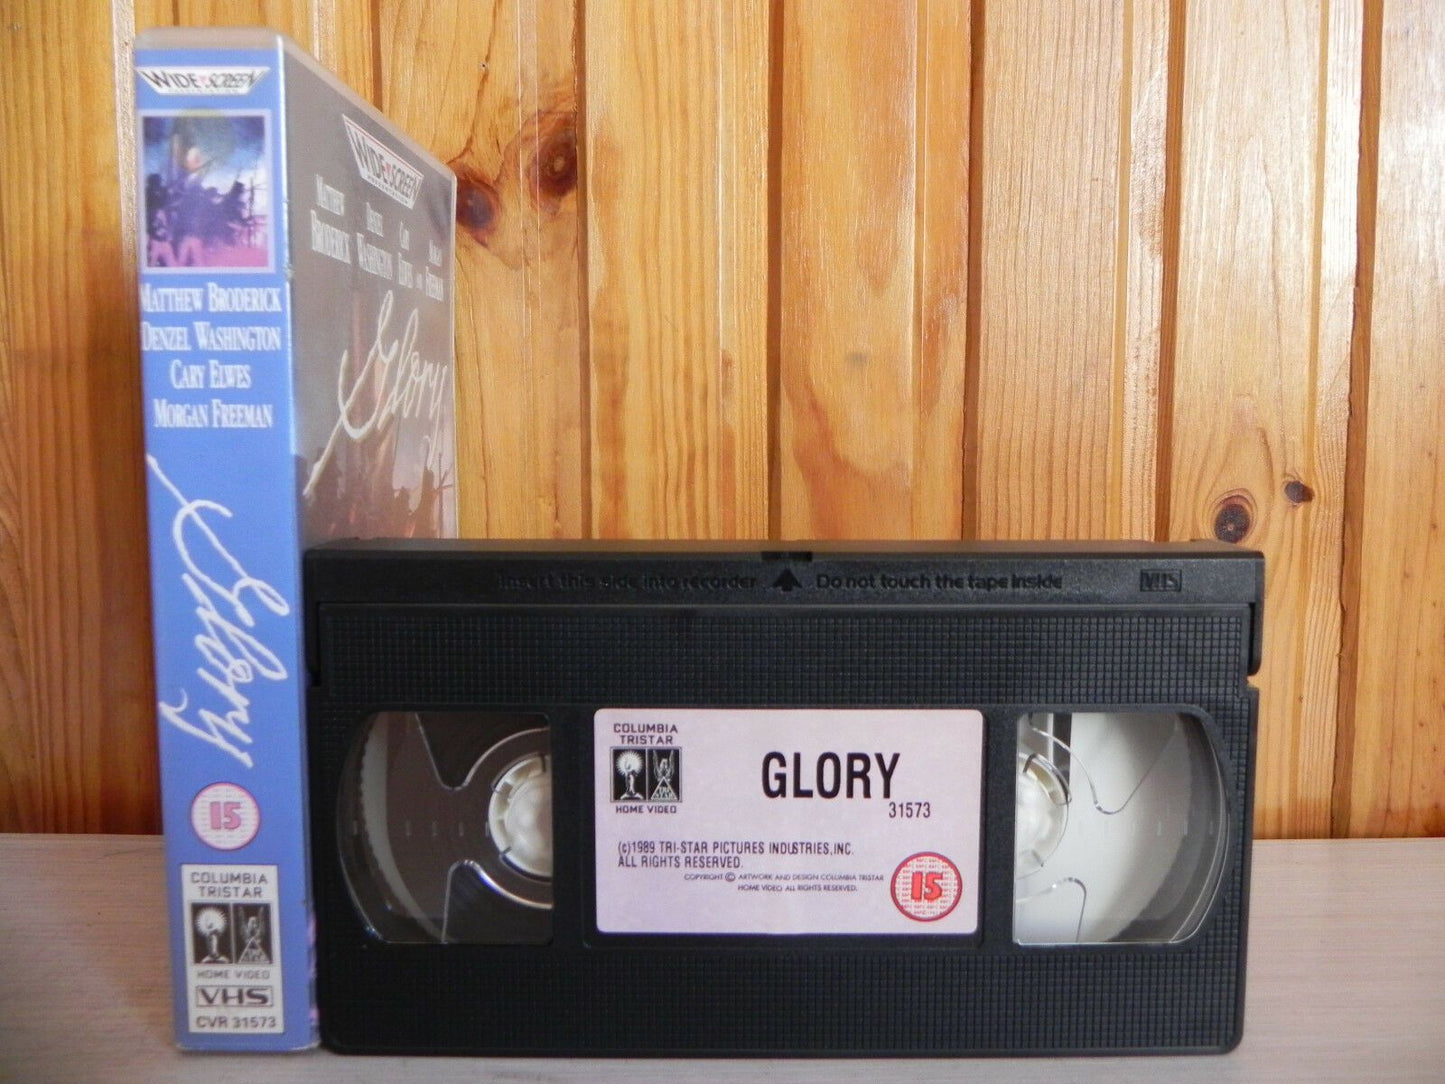 Glory - Columbia Tristar - Winner Of Three Academy Awards - Morgan Freeman - VHS-